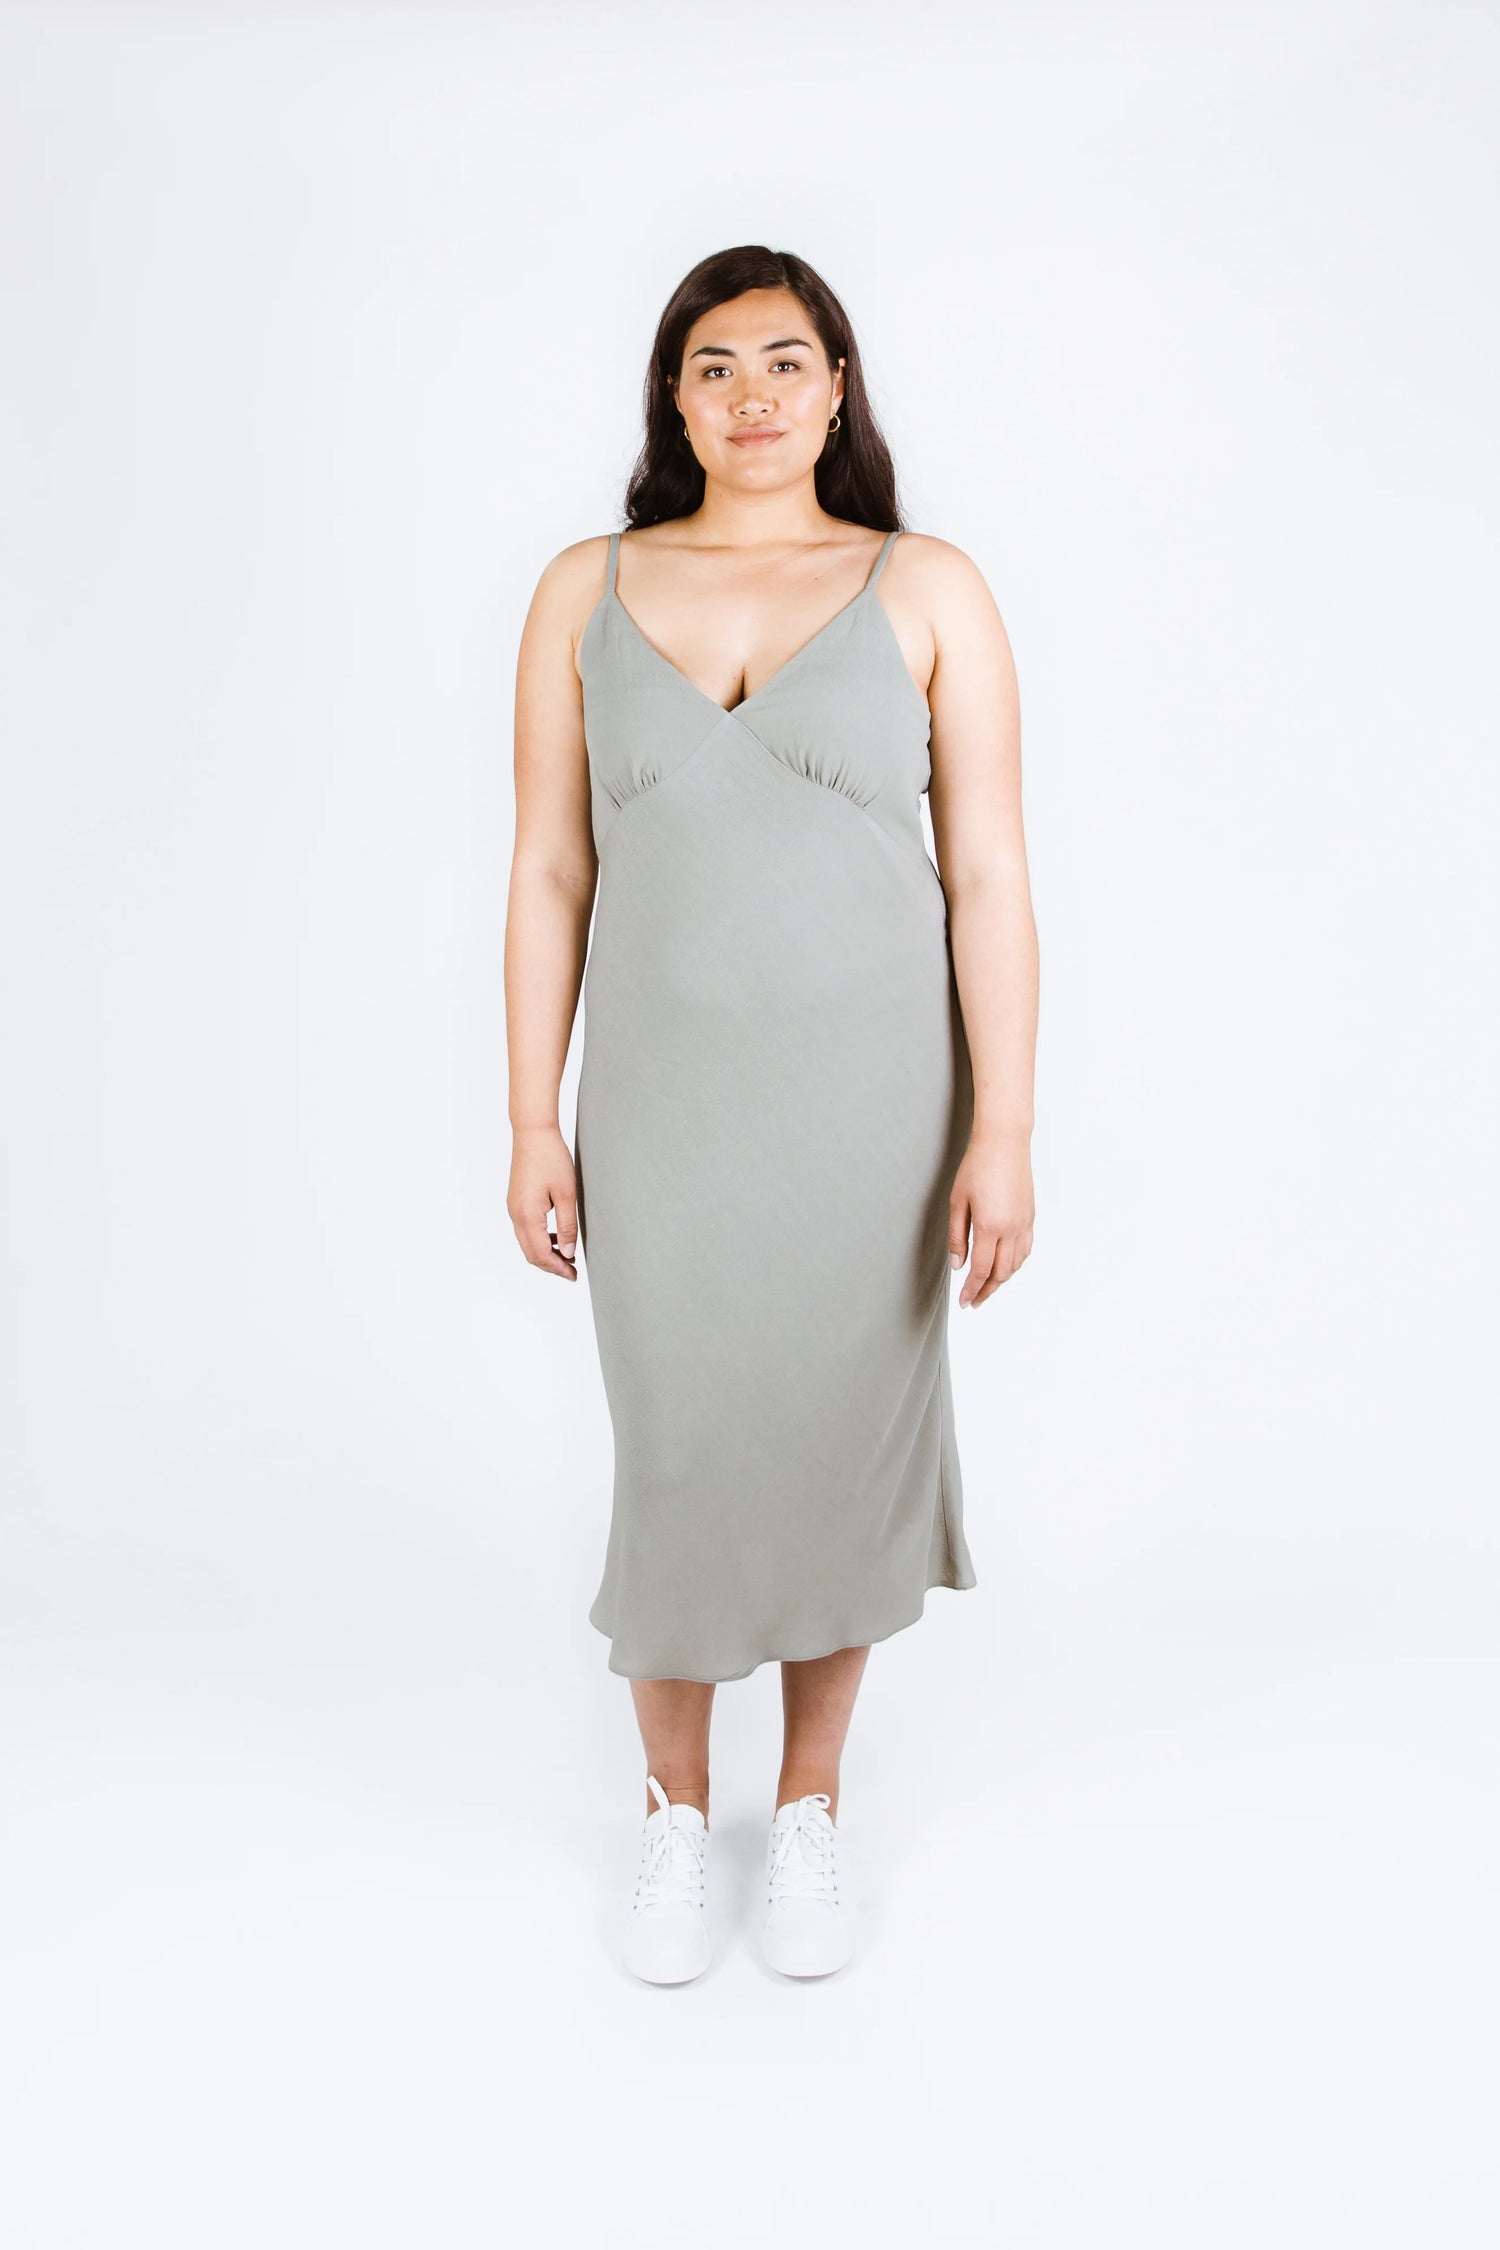 Papercut Patterns - Maya Cami/Dress - Sewing Gem